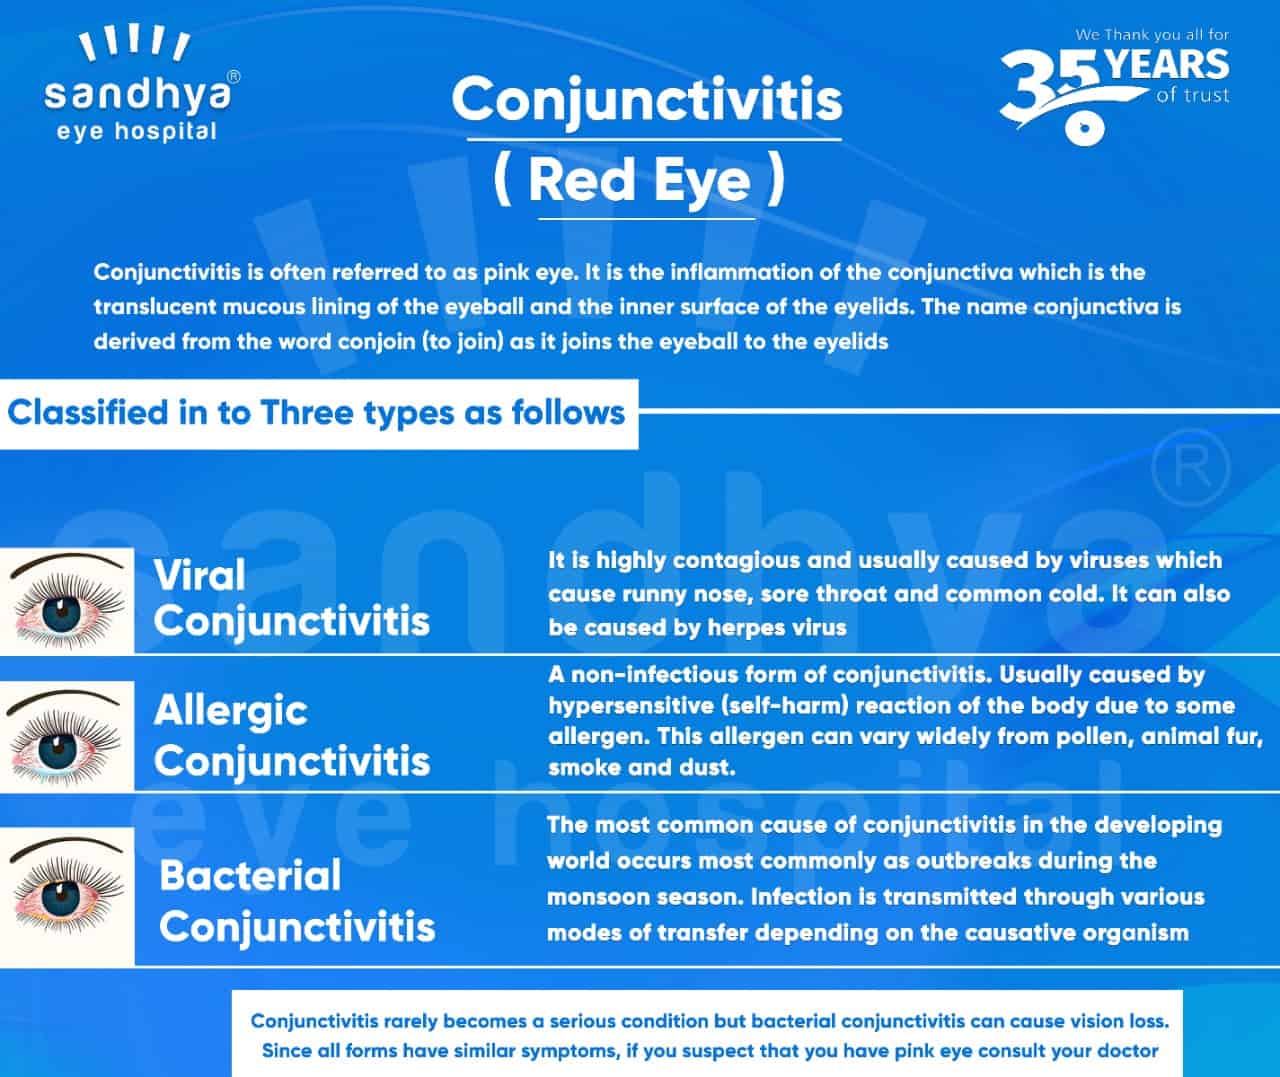 allergic conjunctivitis discharge